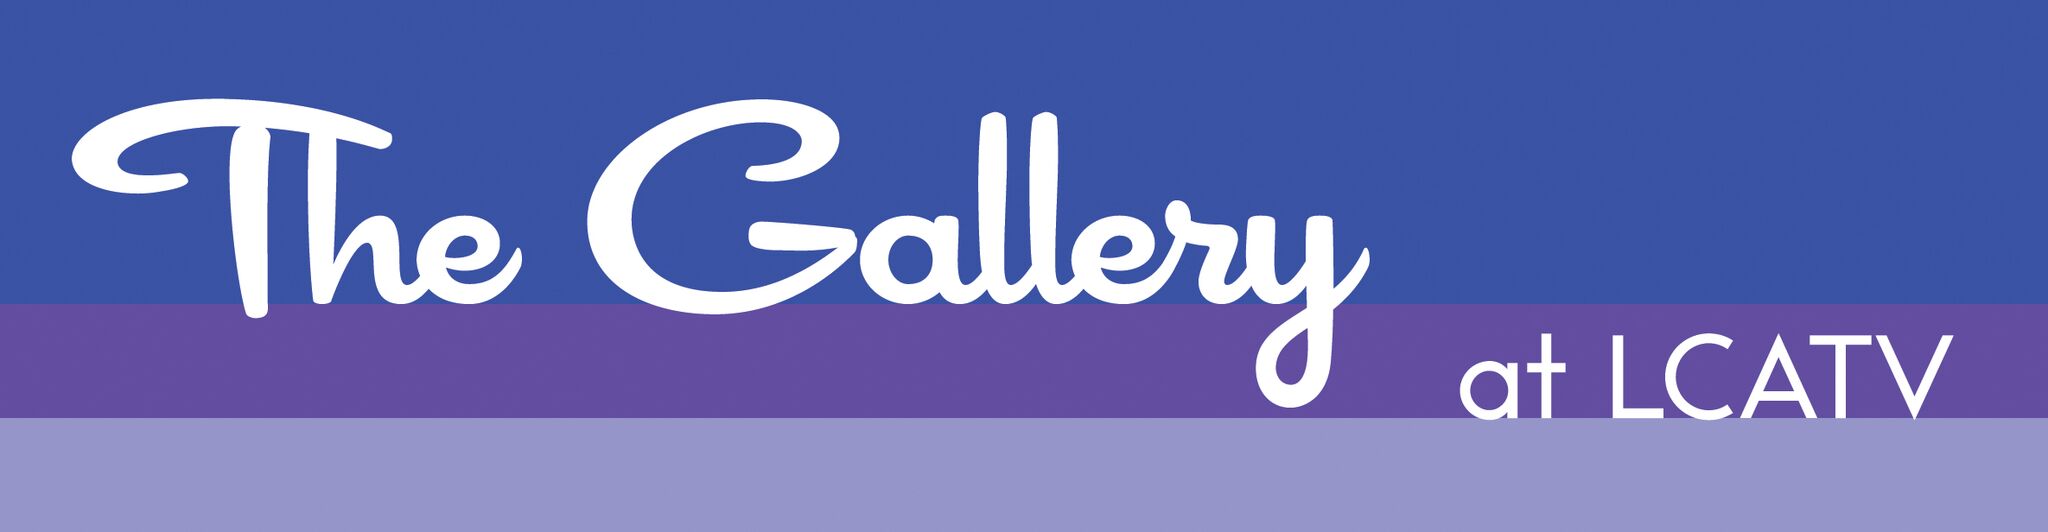 The Gallery at LCATV logo